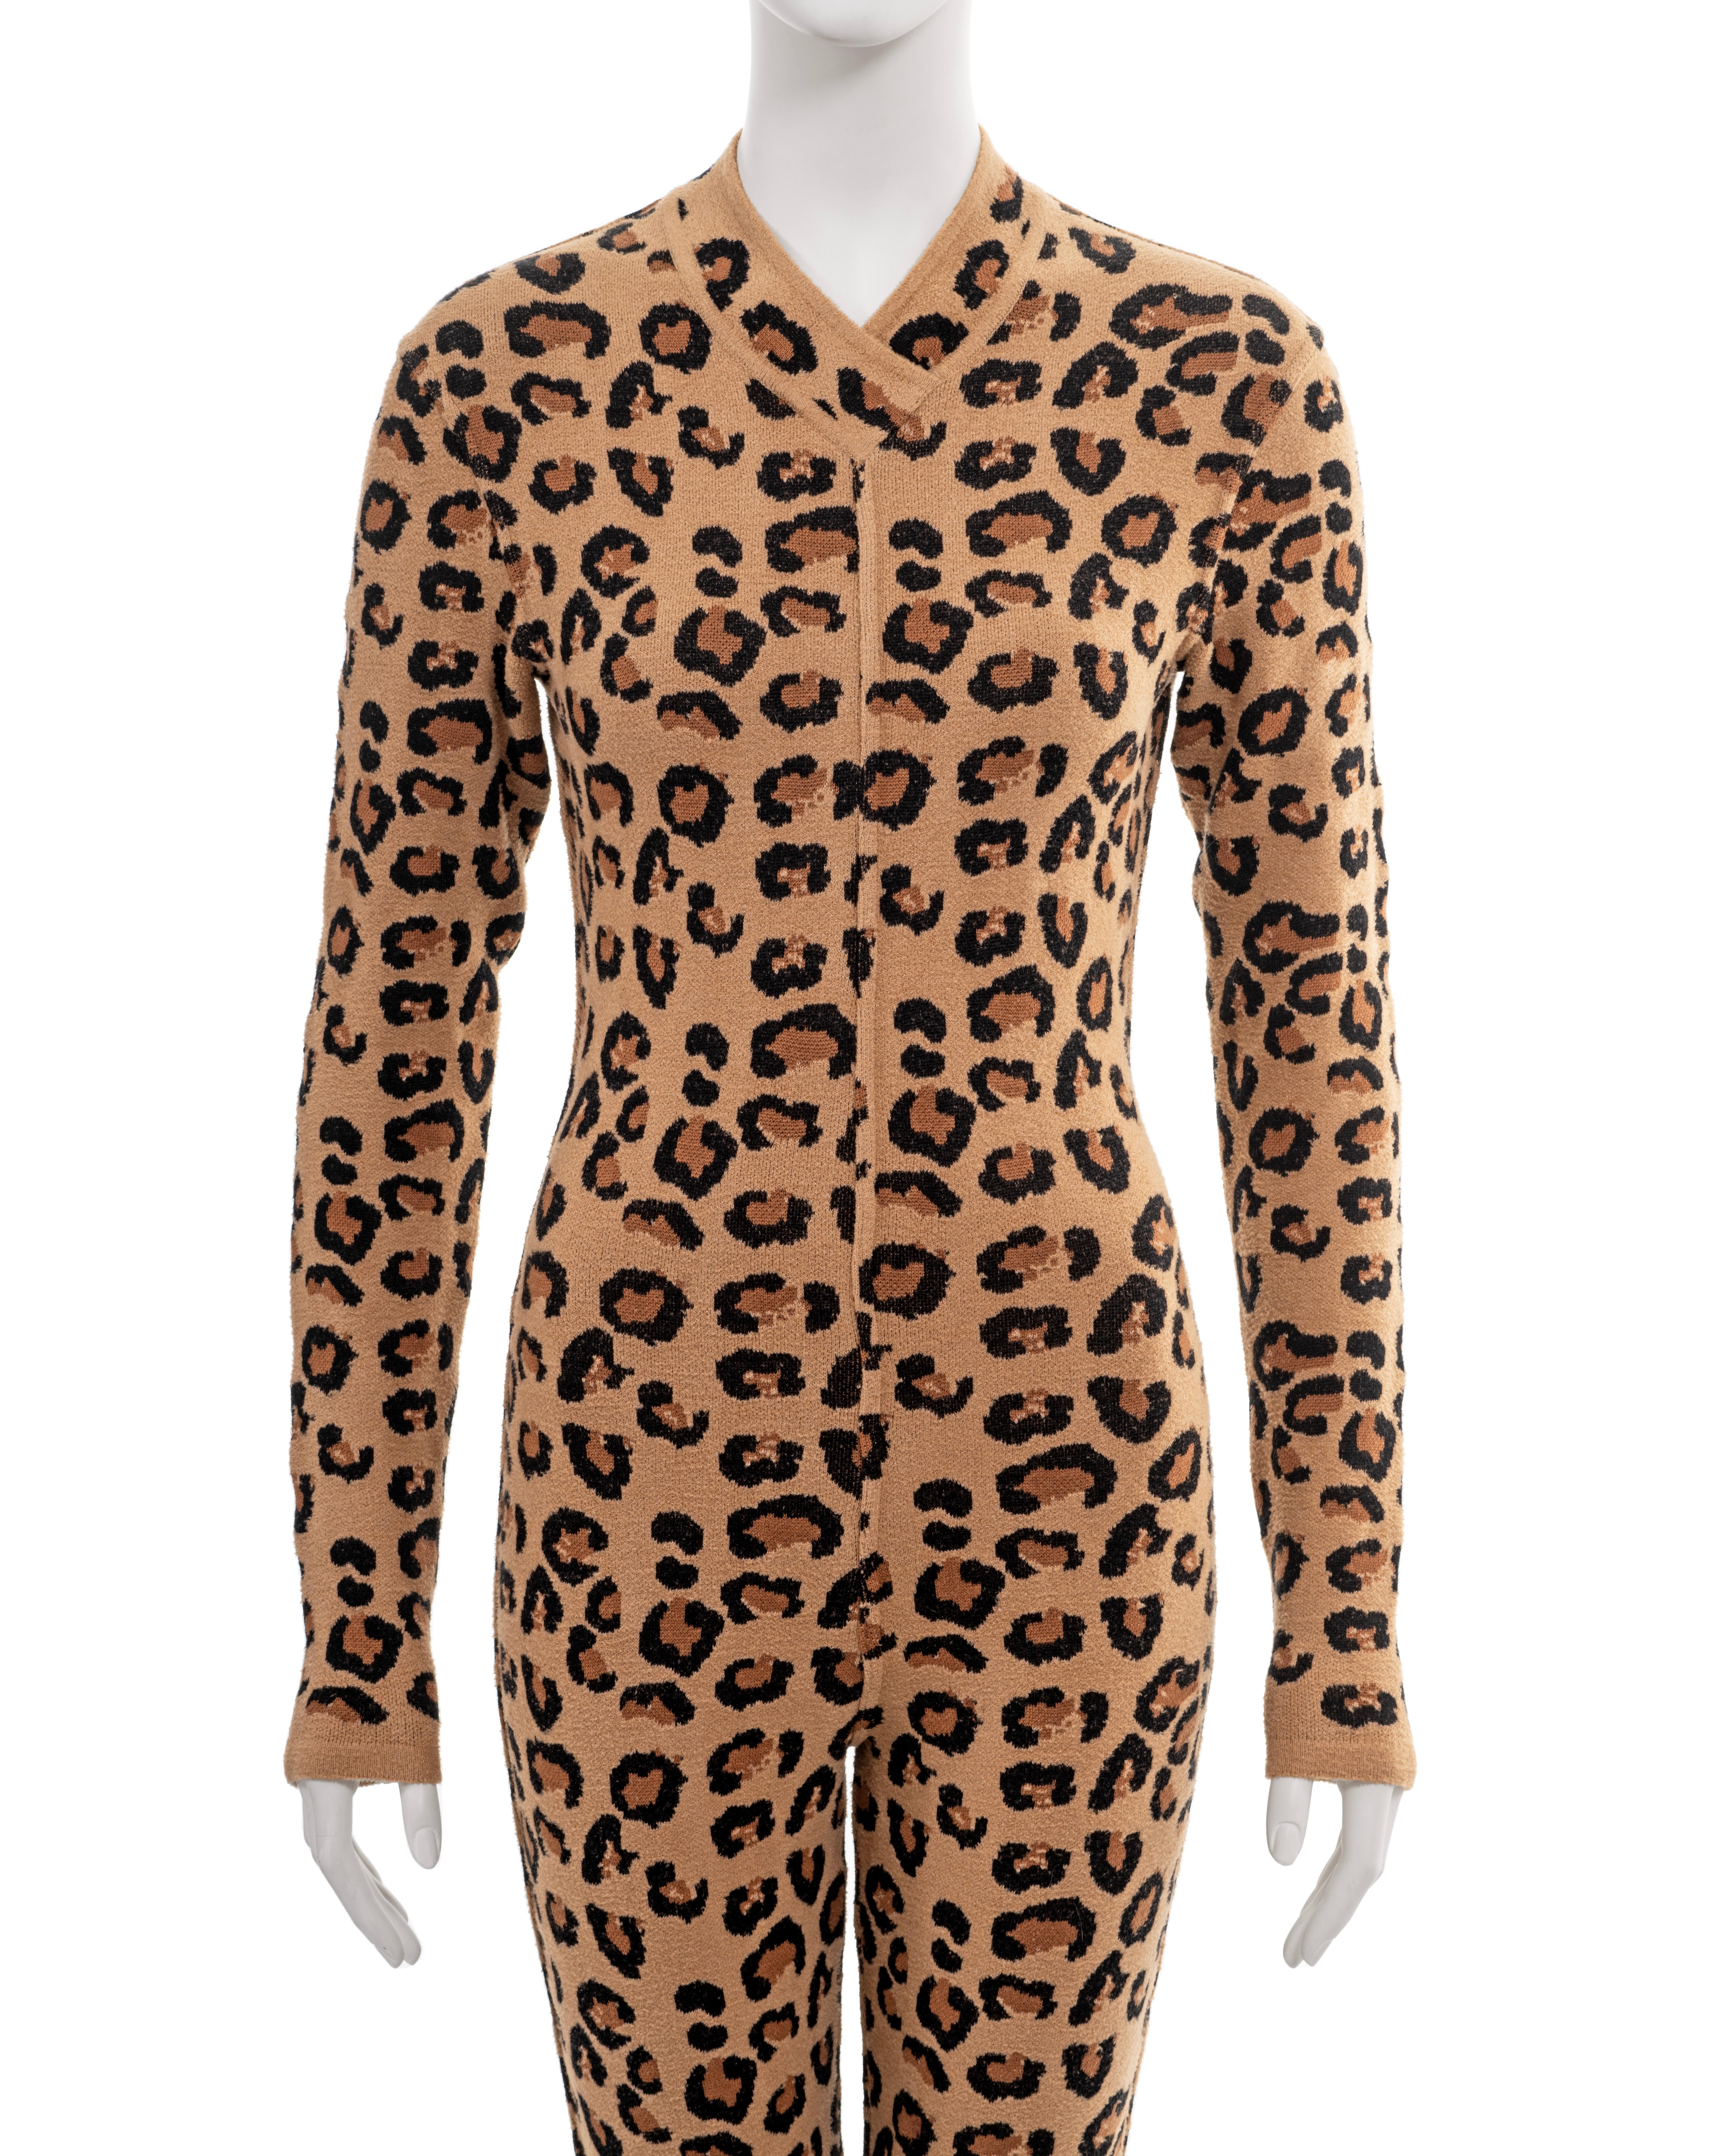 Azzedine Alaia leopard jacquard-knit catsuit and coat runway ensemble, fw 1991 2